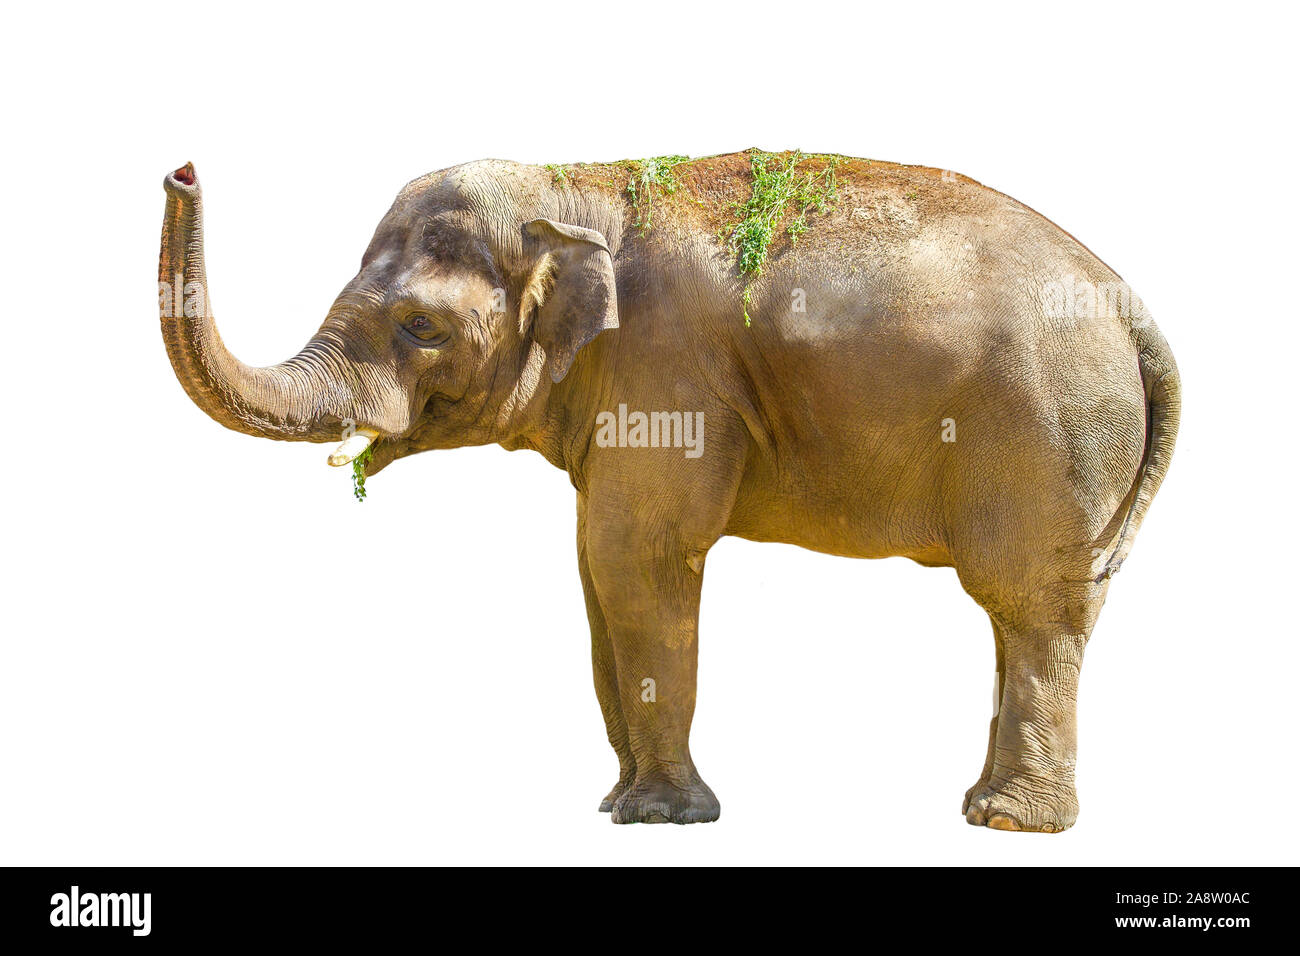 image of a big mammal animal elephant on a white background Stock Photo